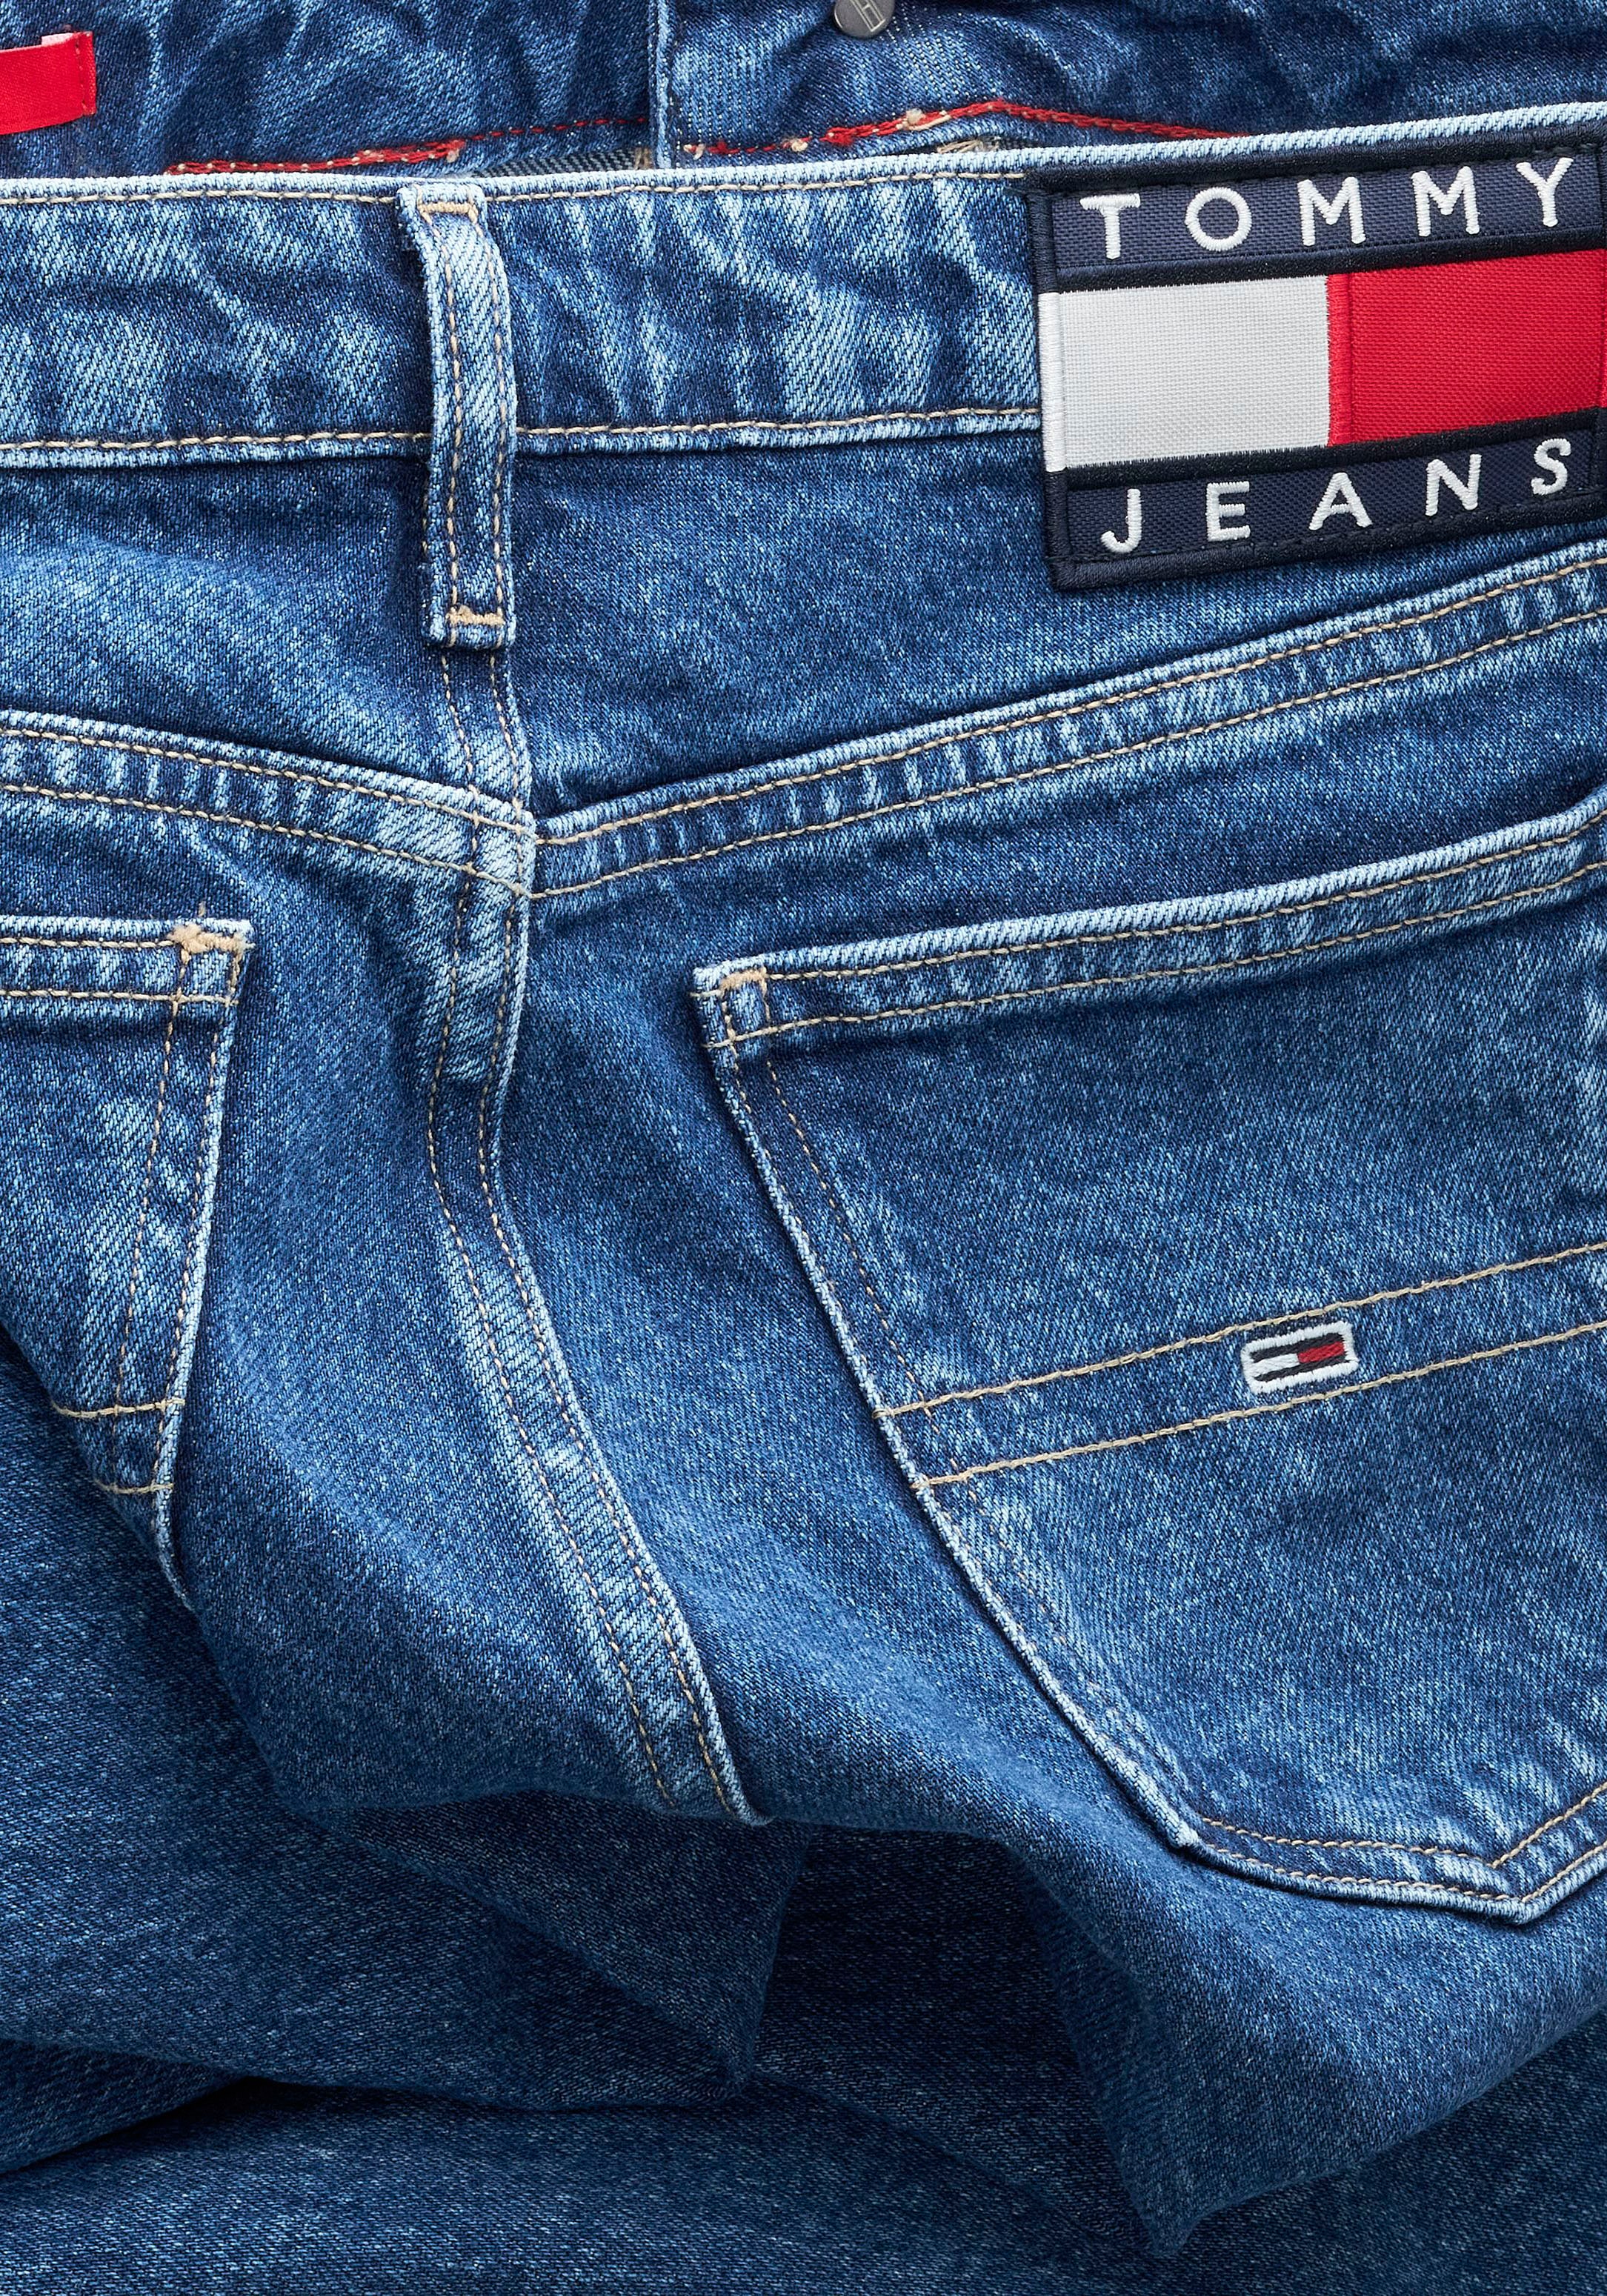 Tommy online Jeans Schlagjeans, bei mit kaufen Logobadge Tommy Jeans OTTO